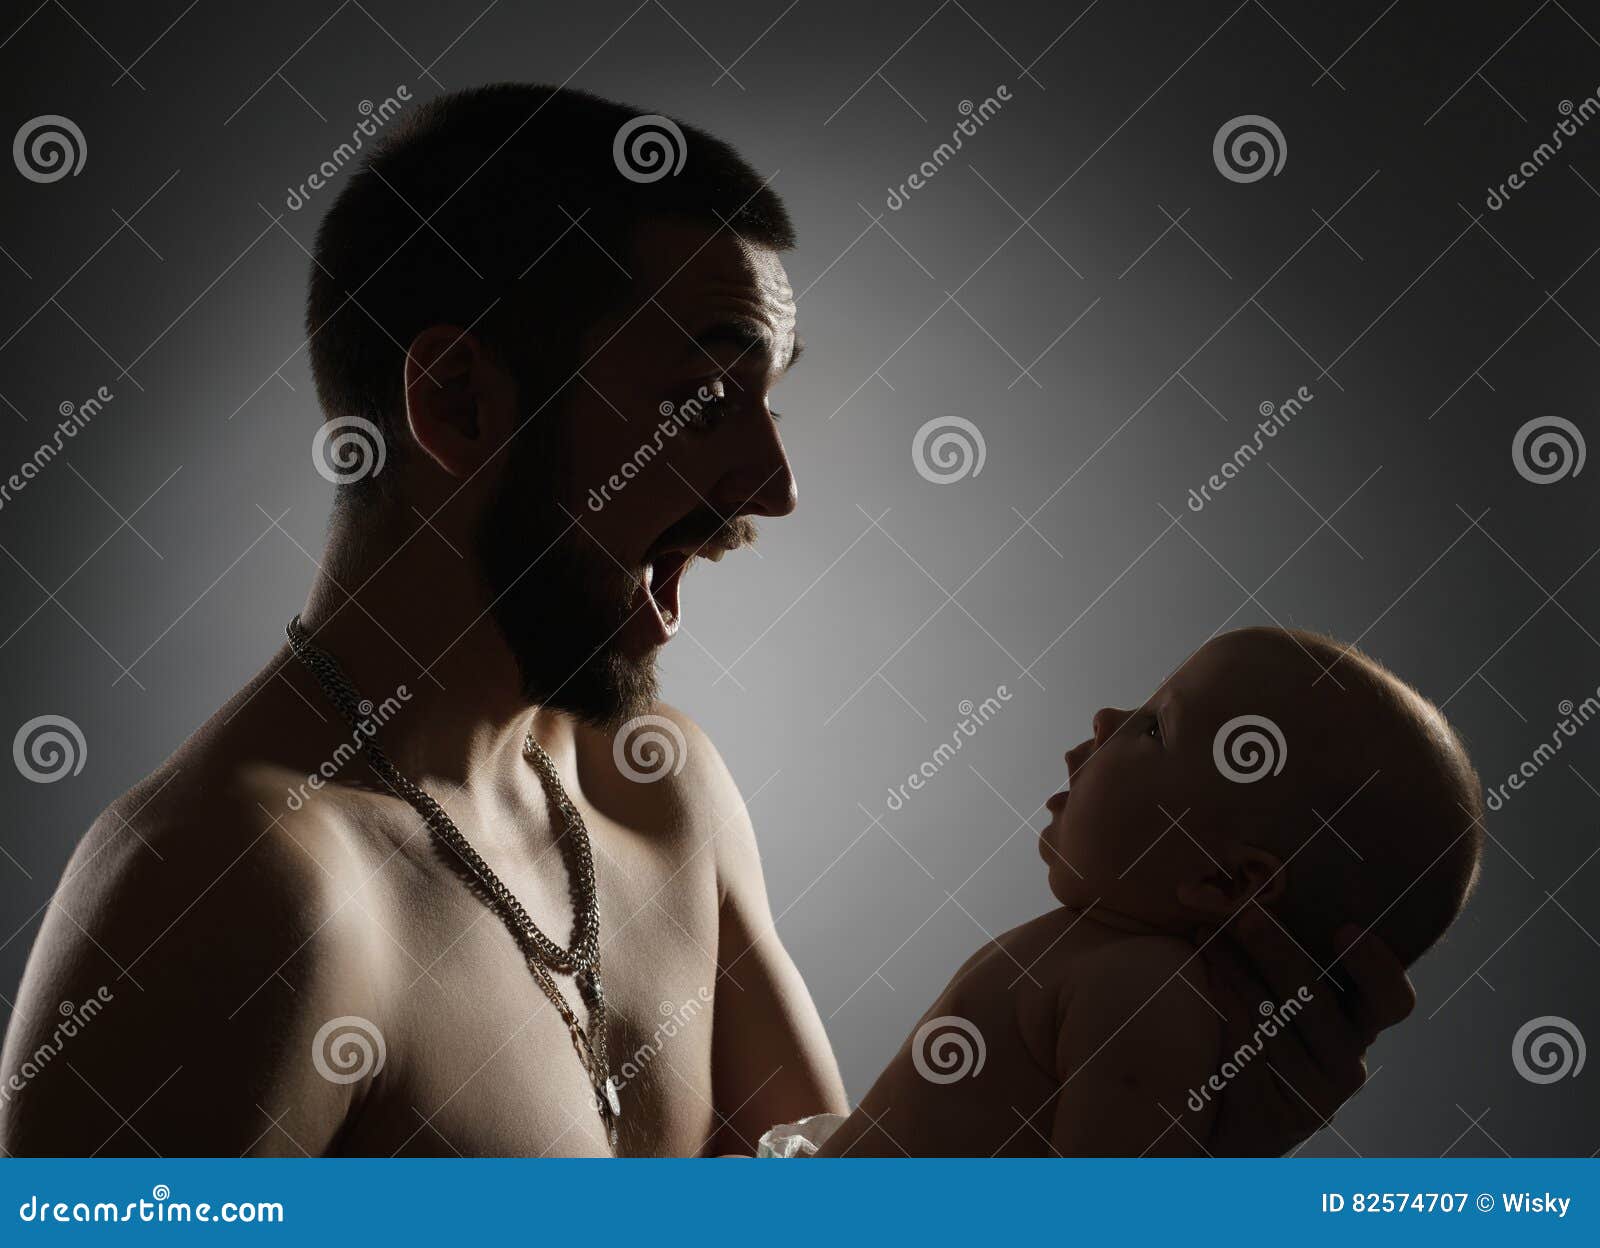 Daddies baby 😋 @inkedmomma112 nude pics